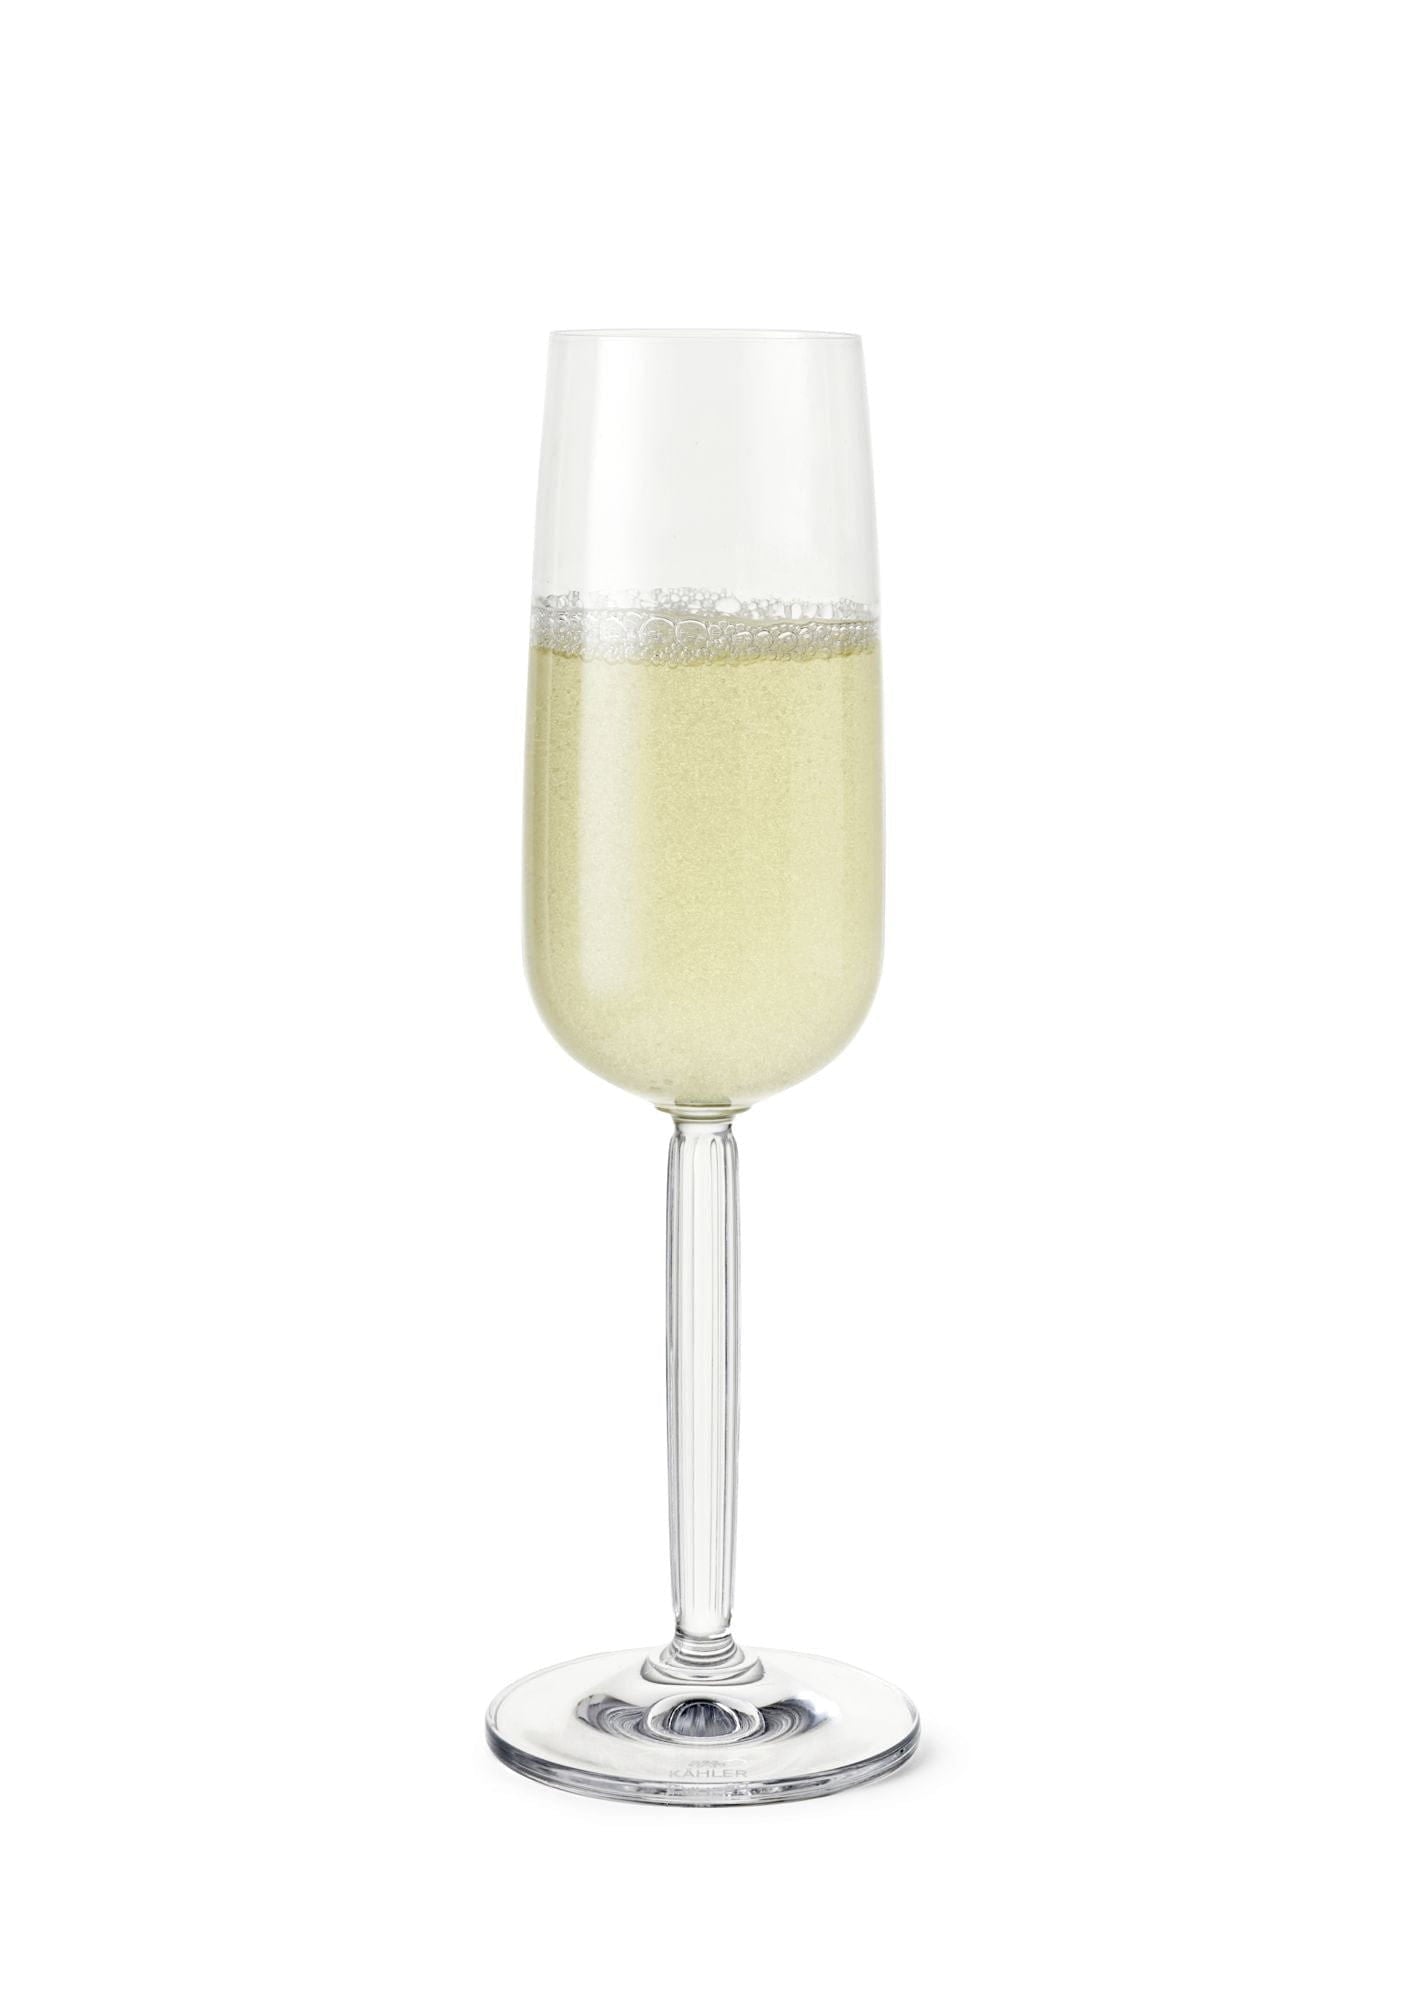 Kähler Hammershøi Champagnerglas Set von 240 ml, klar